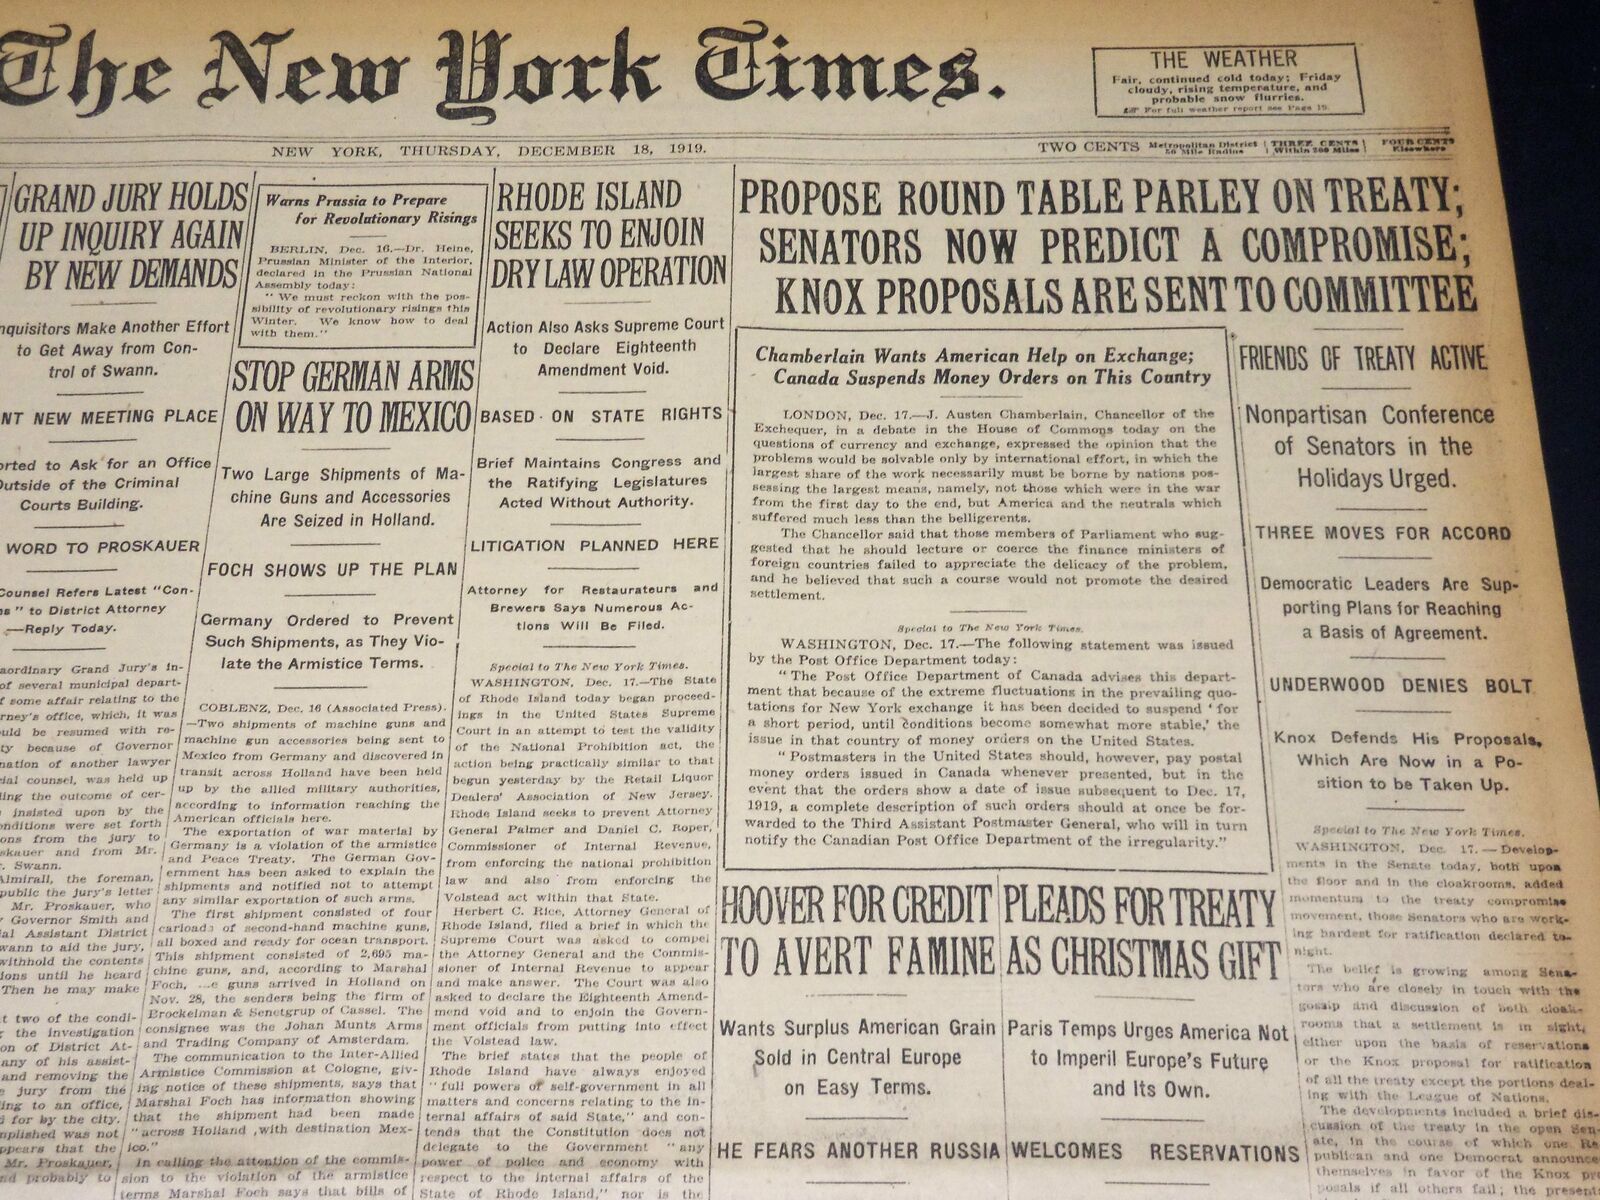 1919 DECEMBER 18 NEW YORK TIMES - SENATORS PREDICT A COMPROMISE - NT 8539